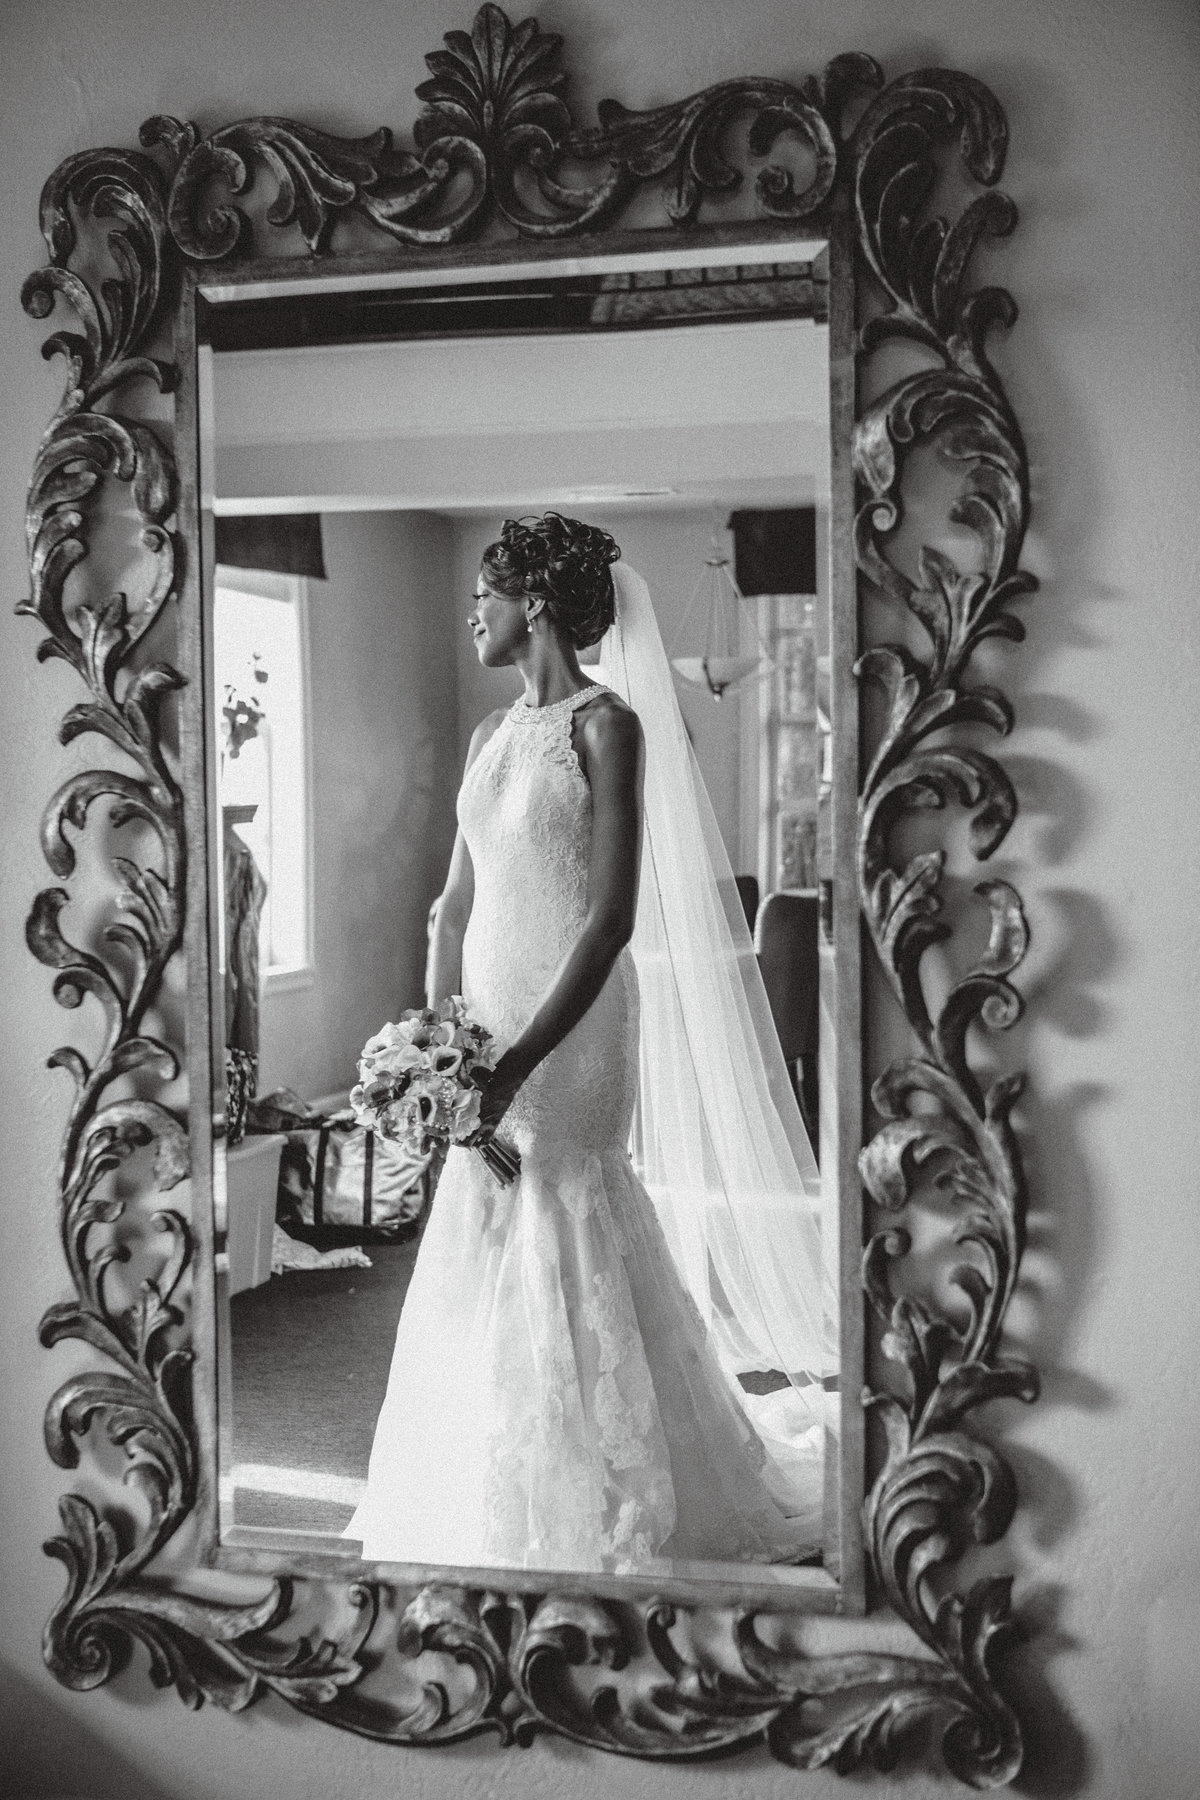 Bride in front of mirror